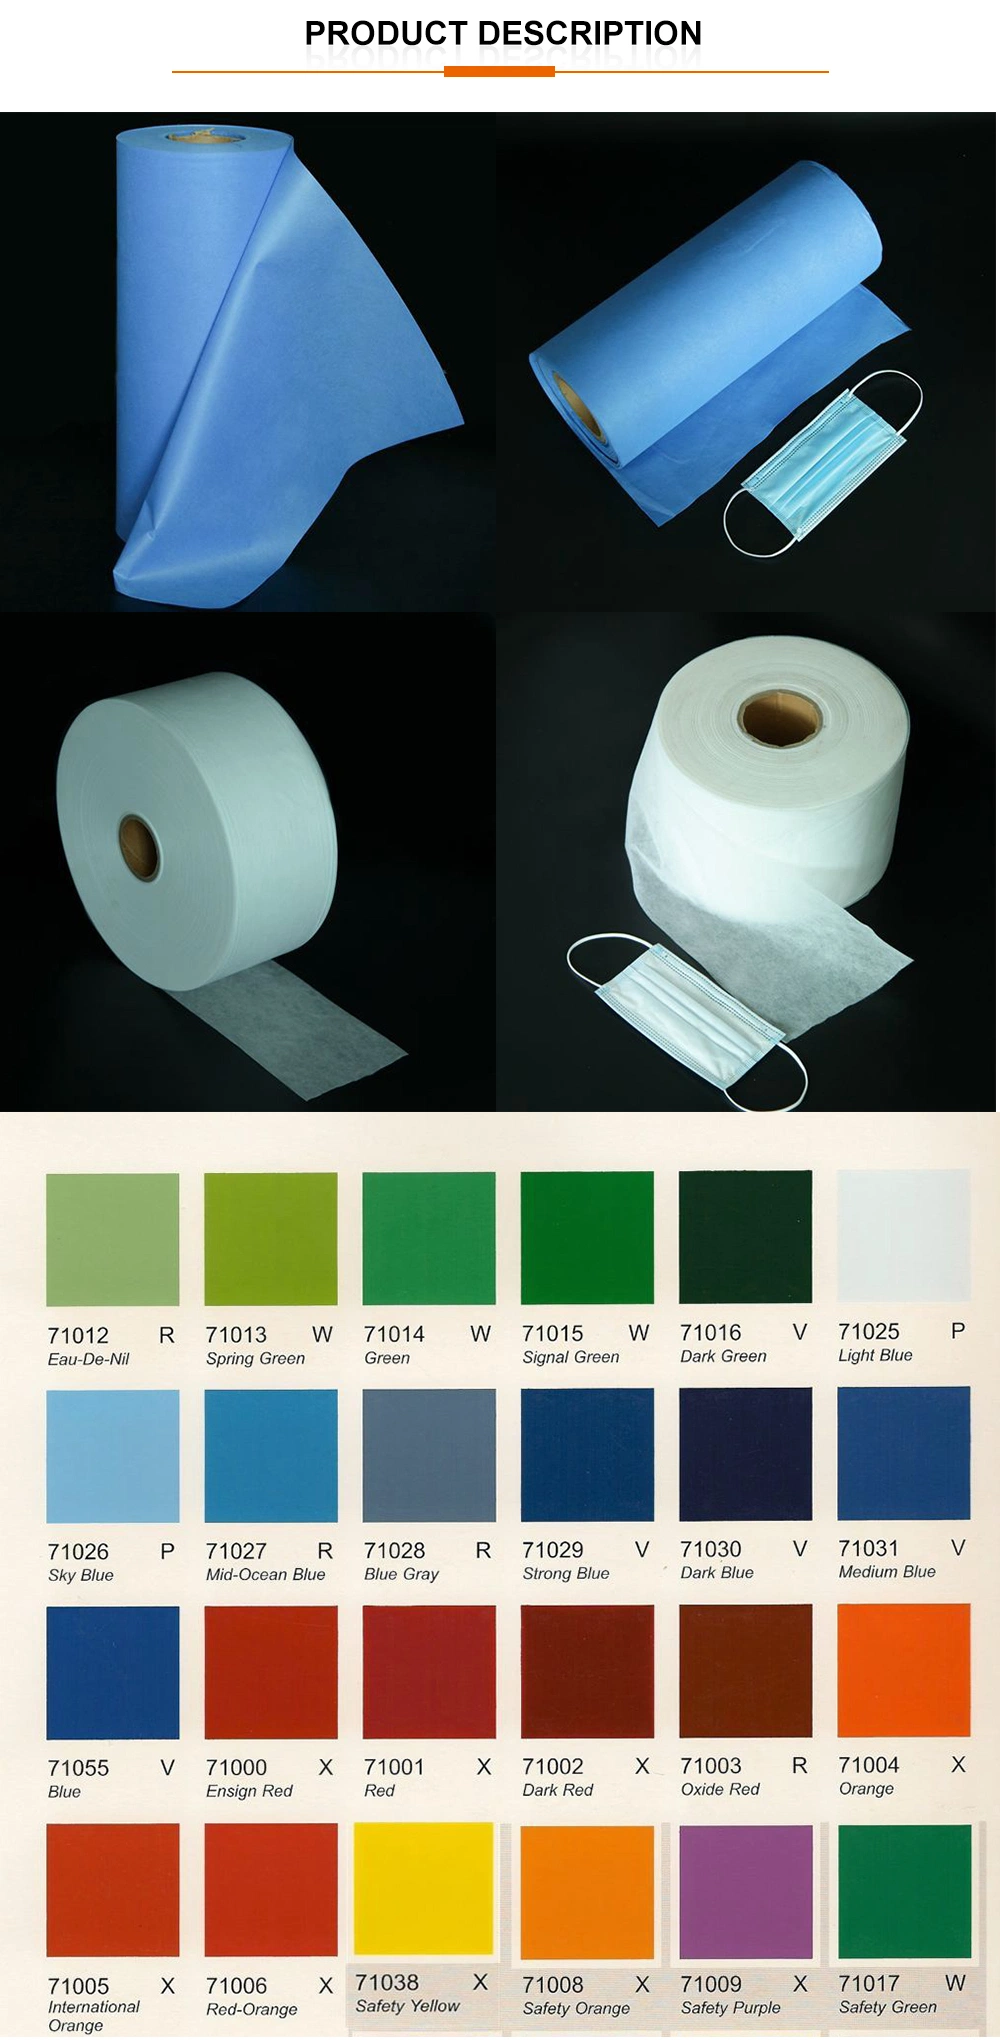 Biodegradable PP Spunbond Non Woven Fabric